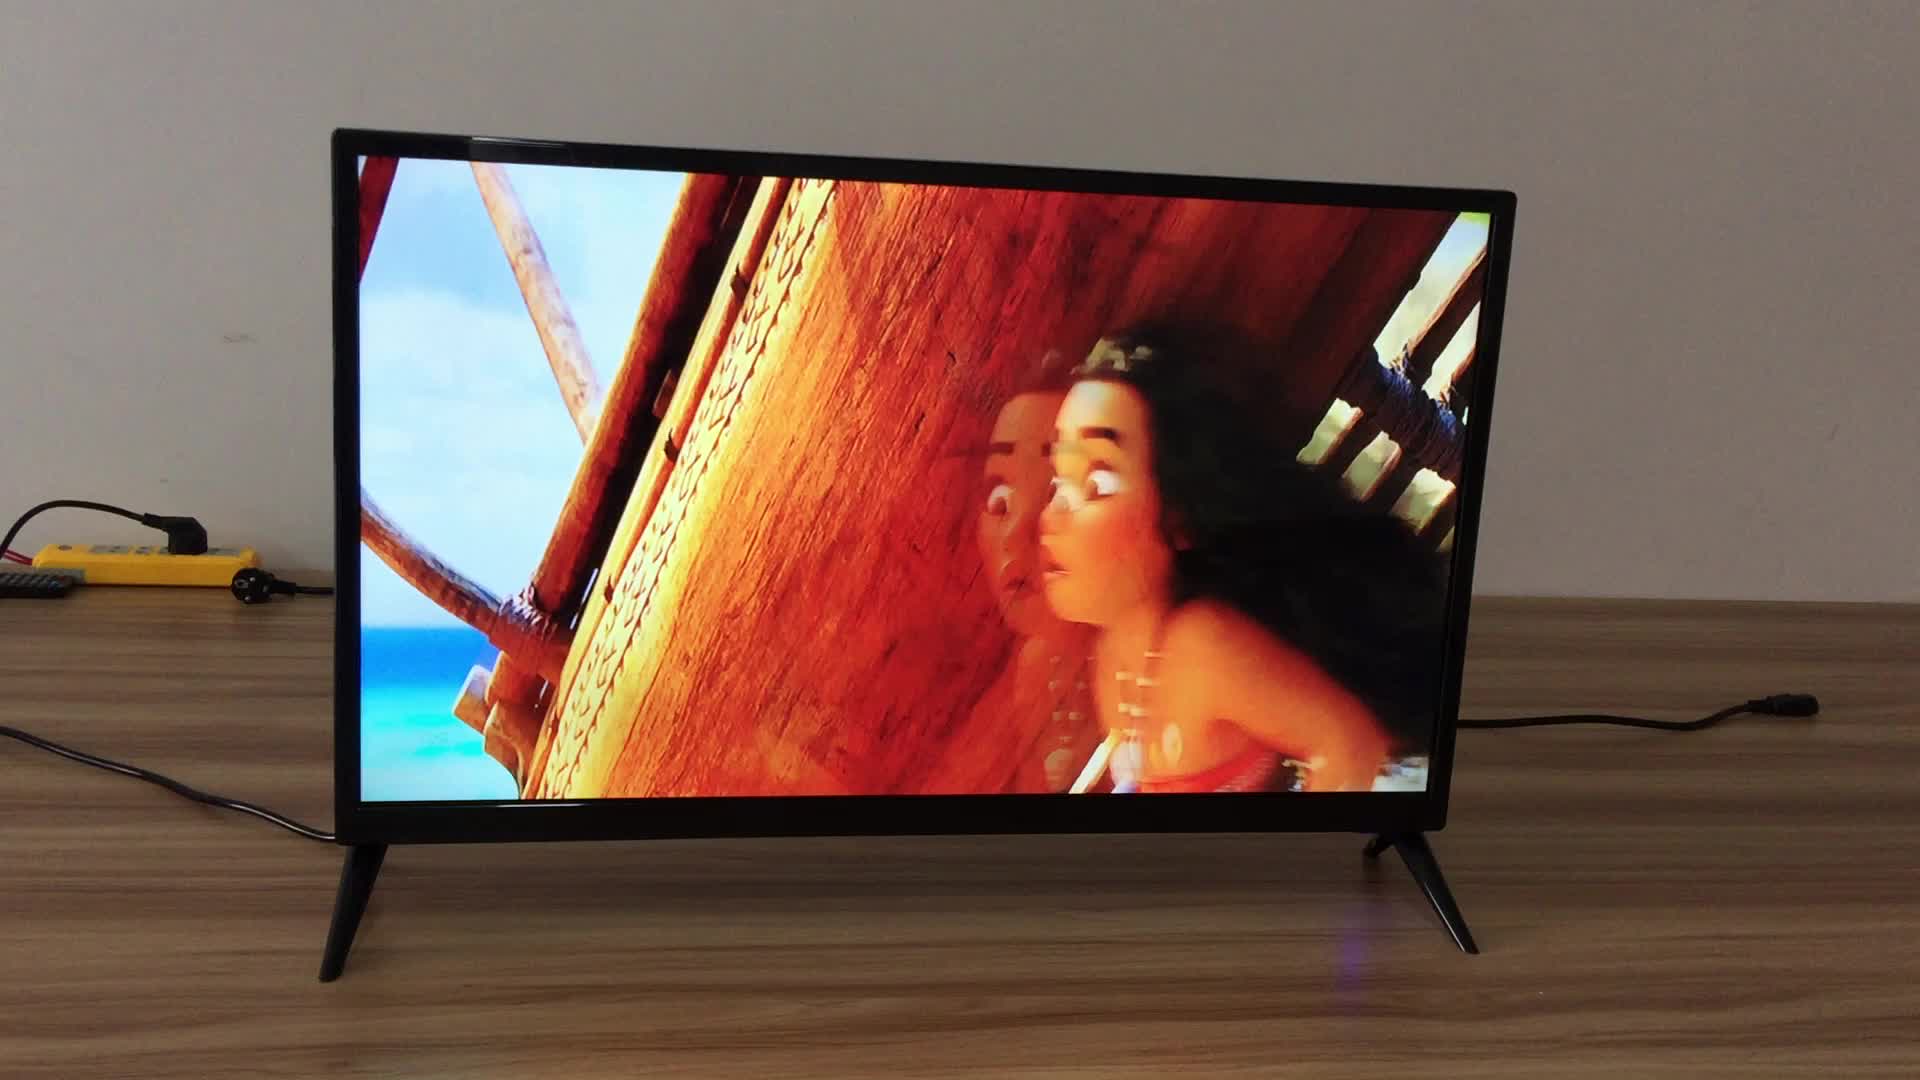 Лучший бюджетный телевизор 50. Телевизор Ava 43 43w5 led FHD Smart Android Black. Лучшие бюджетные телевизоры 50 дюймов.